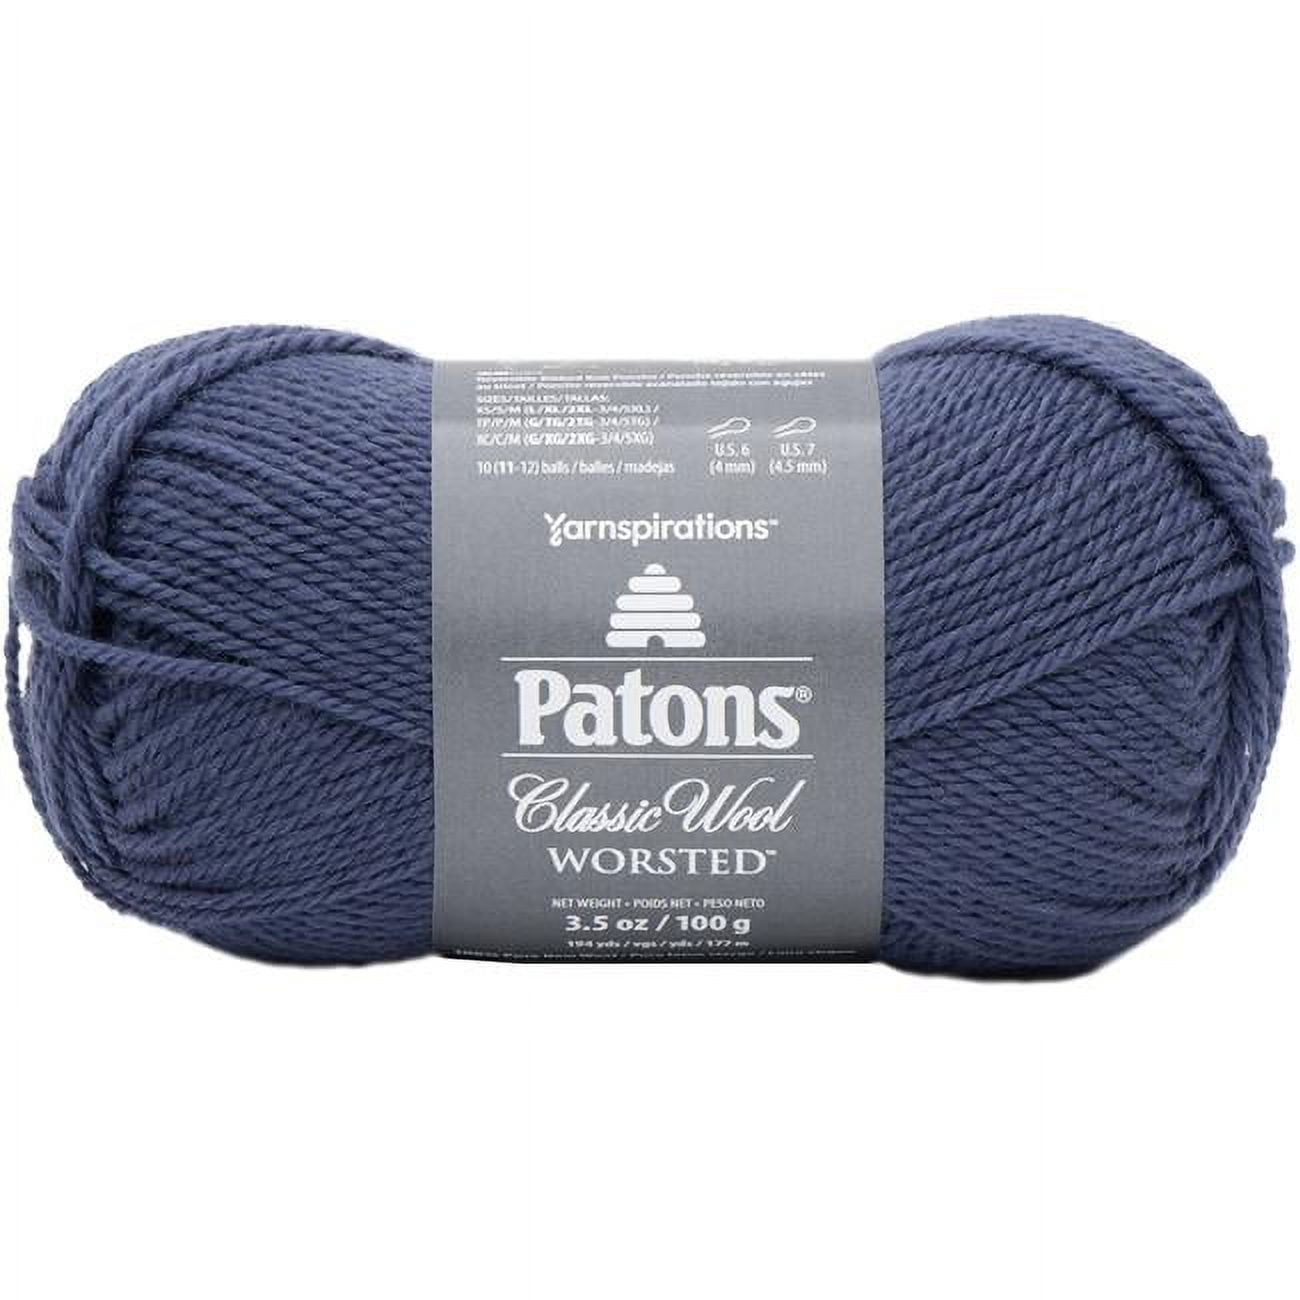 Patons Inspired Yarn, Scarlet